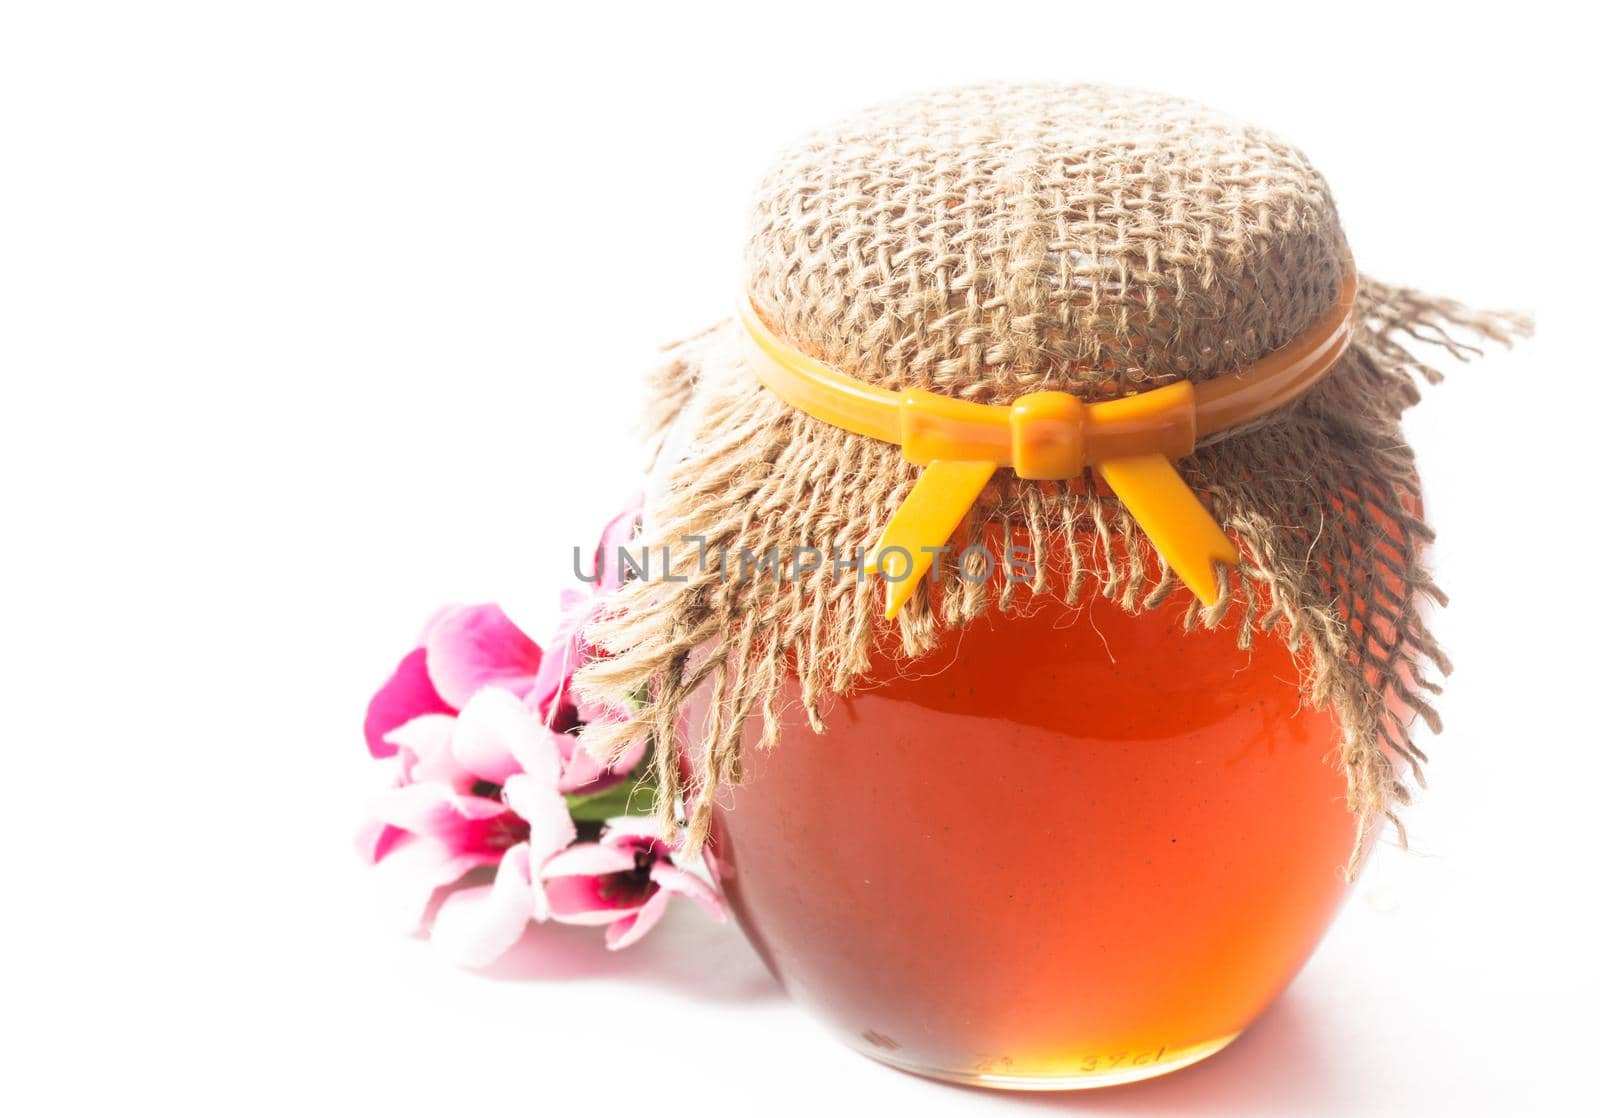 Jam or honey in a jar on white backround